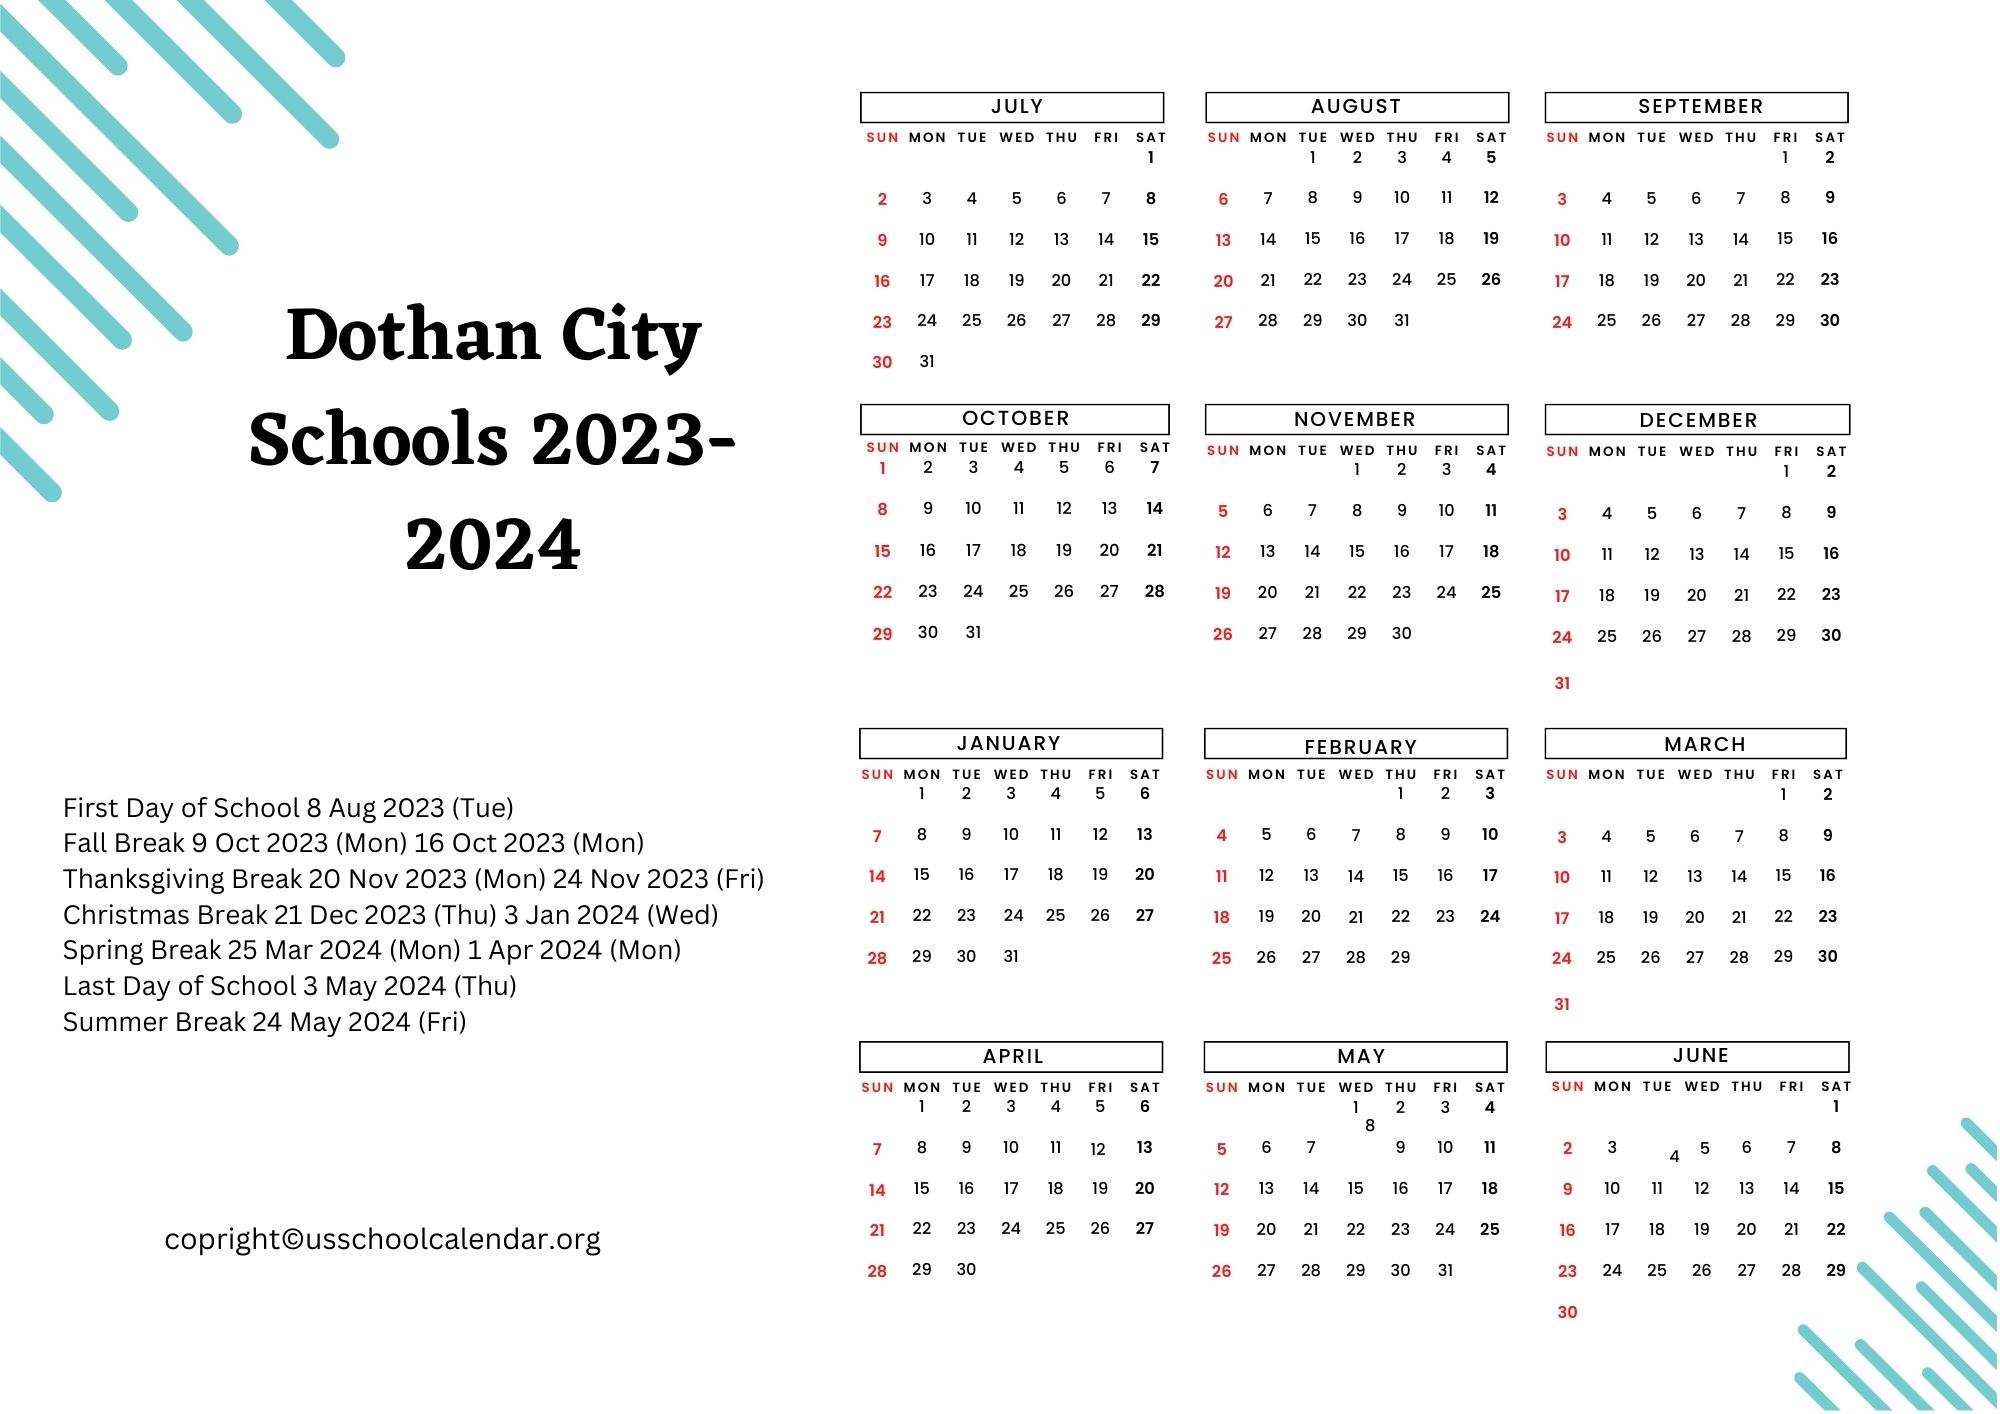 Dothan City Schools Calendar with Holidays 2023-2024